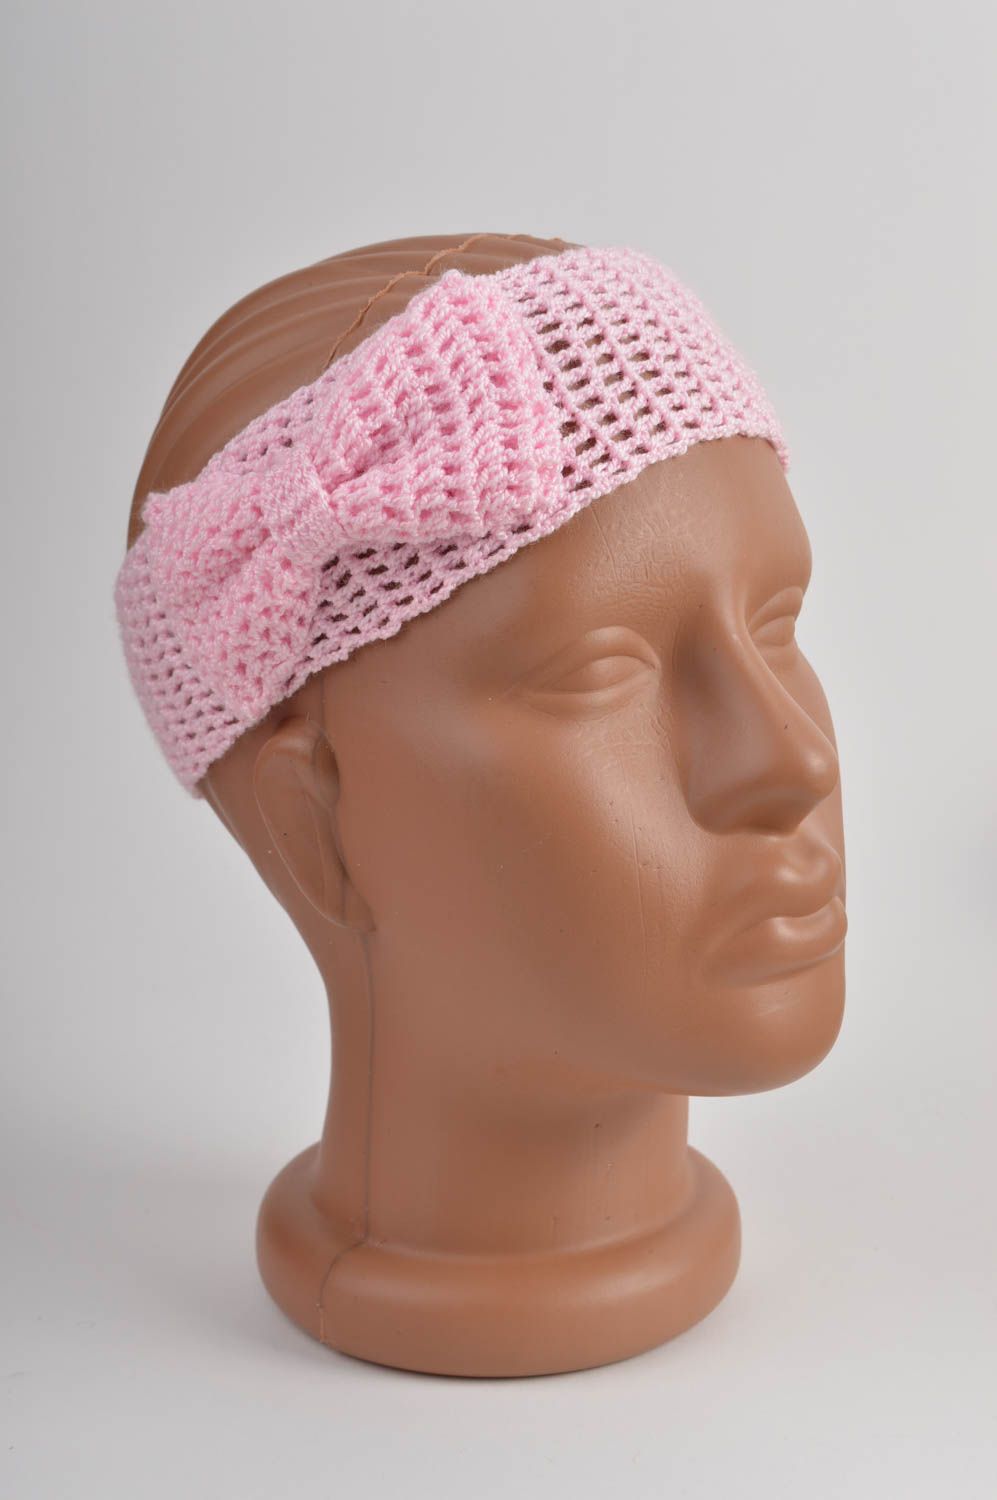 Handmade pink headband for kids unusual hair accessory stylish headband photo 2